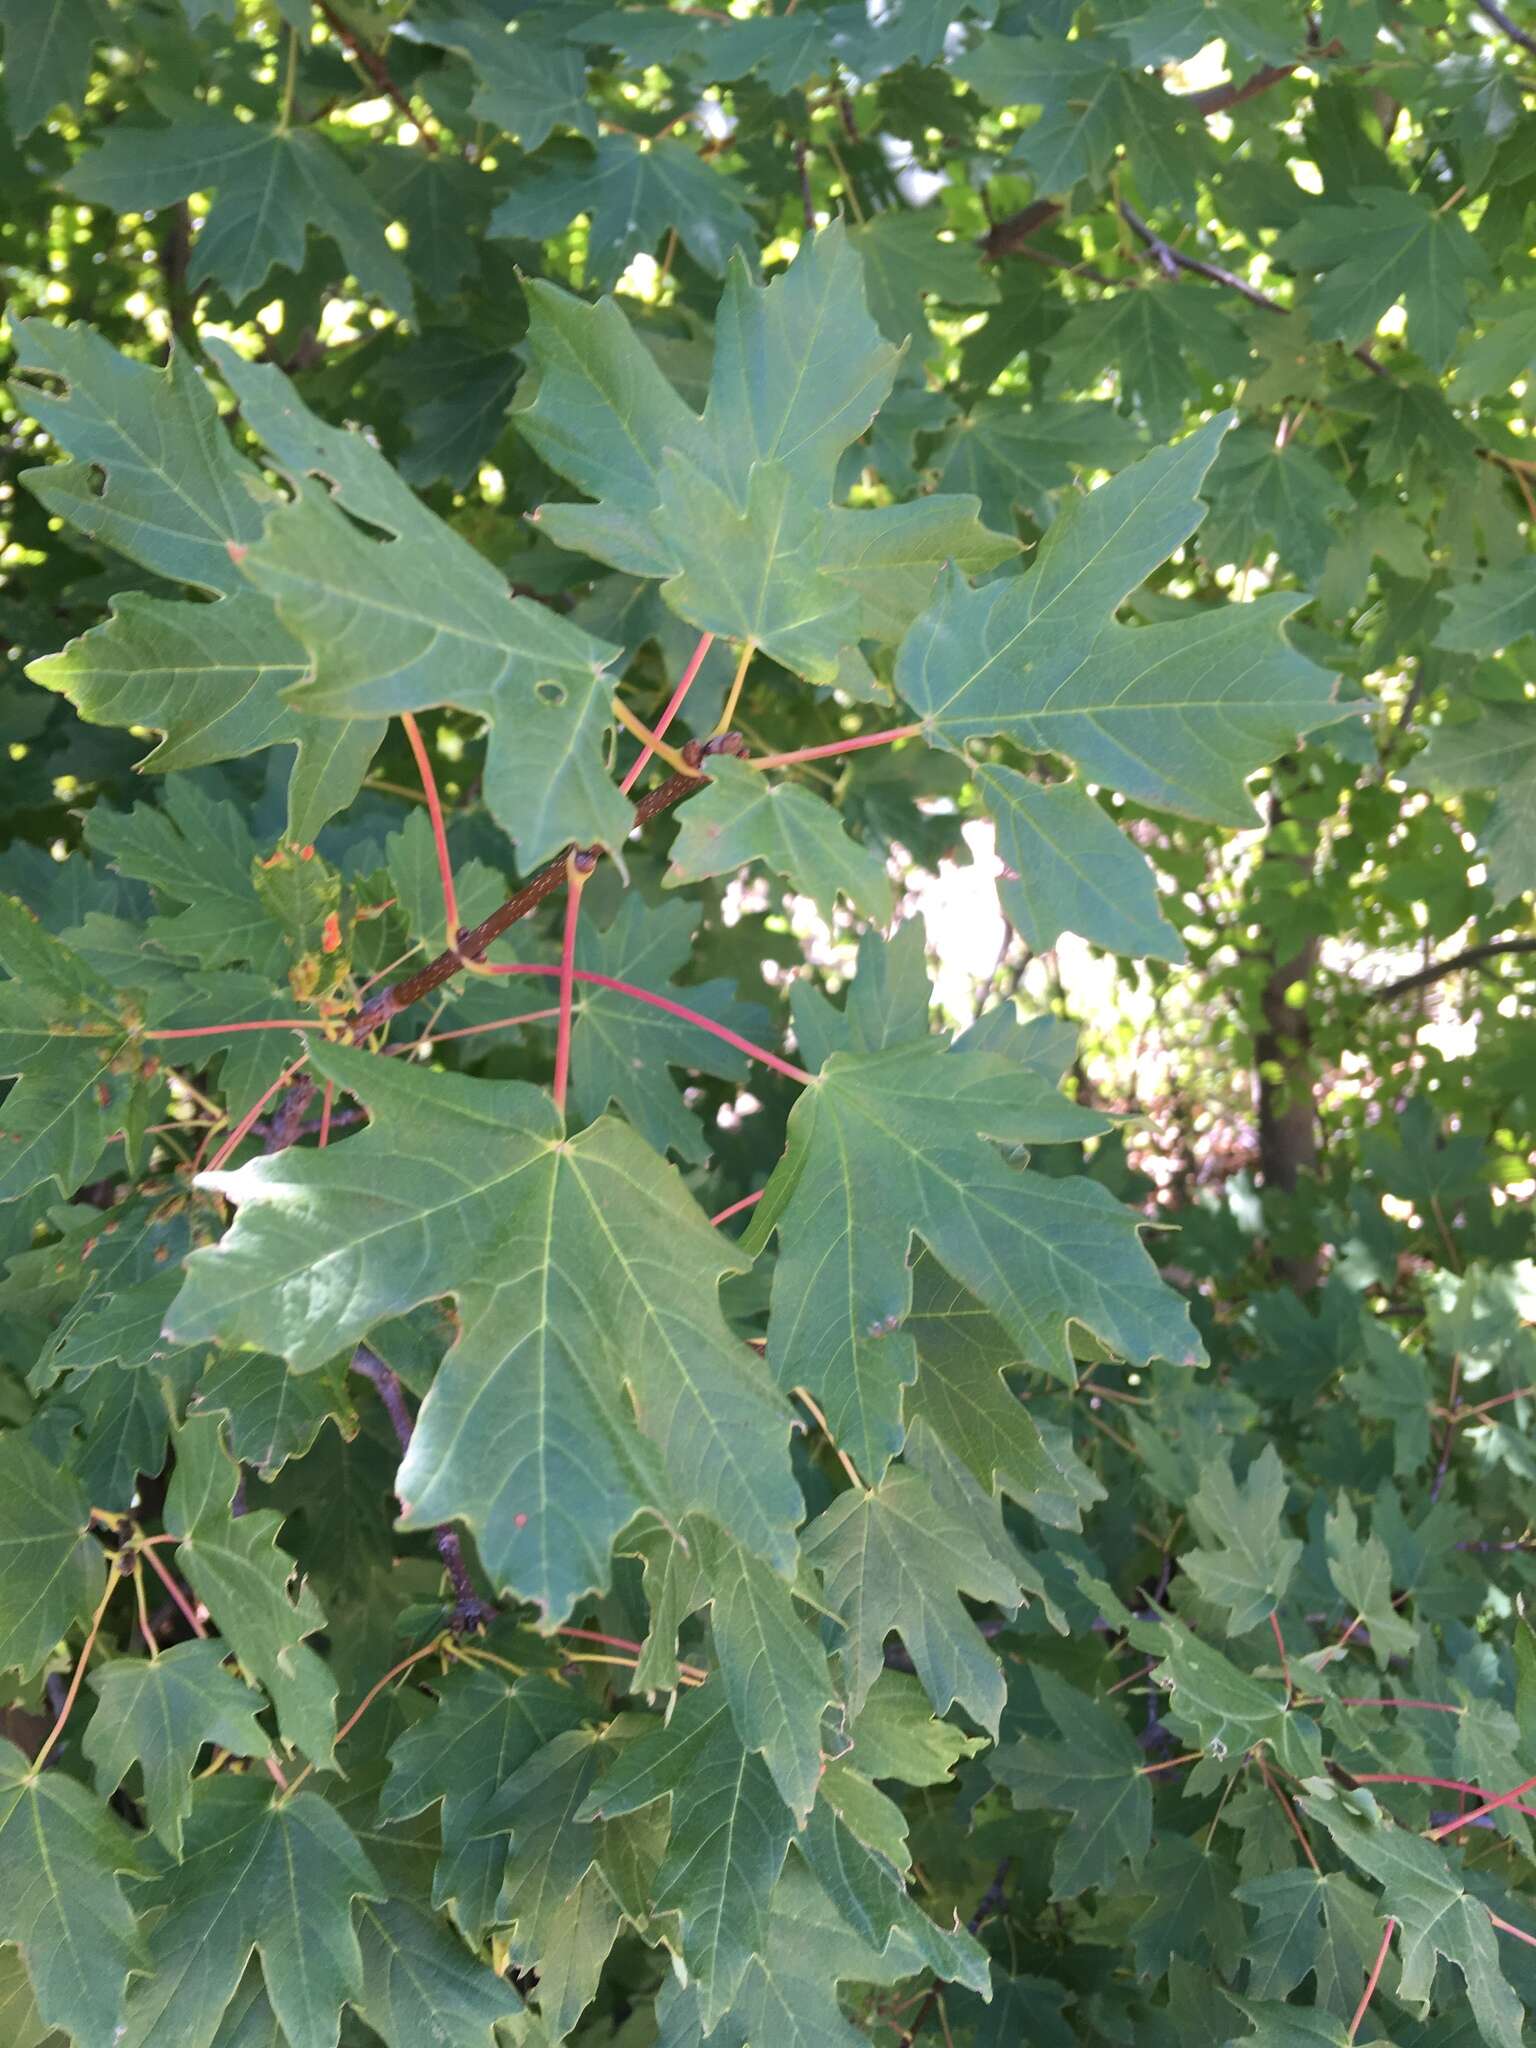 Image of Acer hyrcanum subsp. stevenii (Pojark.) E. Murray